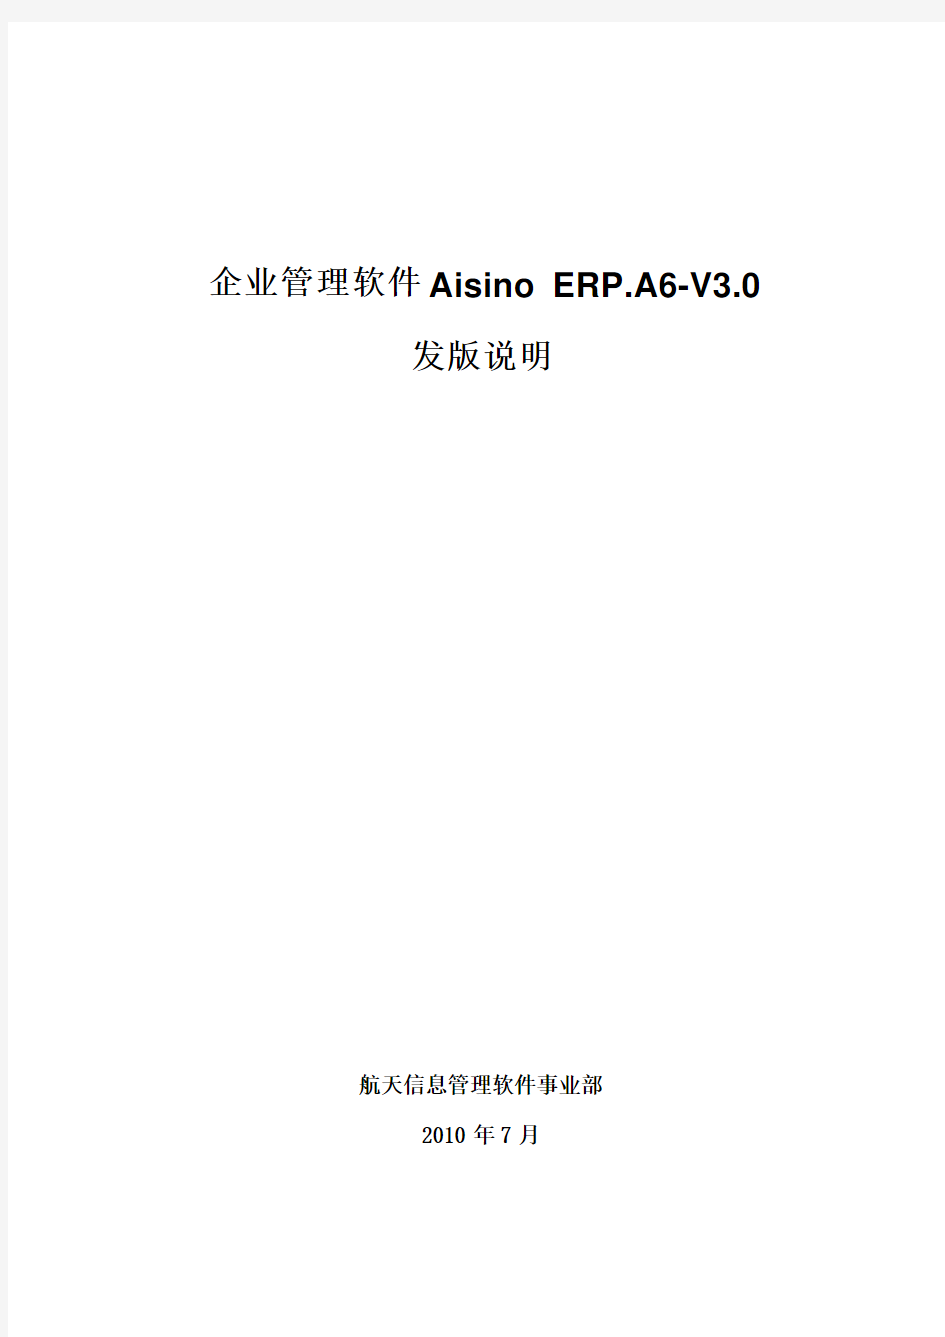 Aisino ERP[1].A6-V3.0发版说明